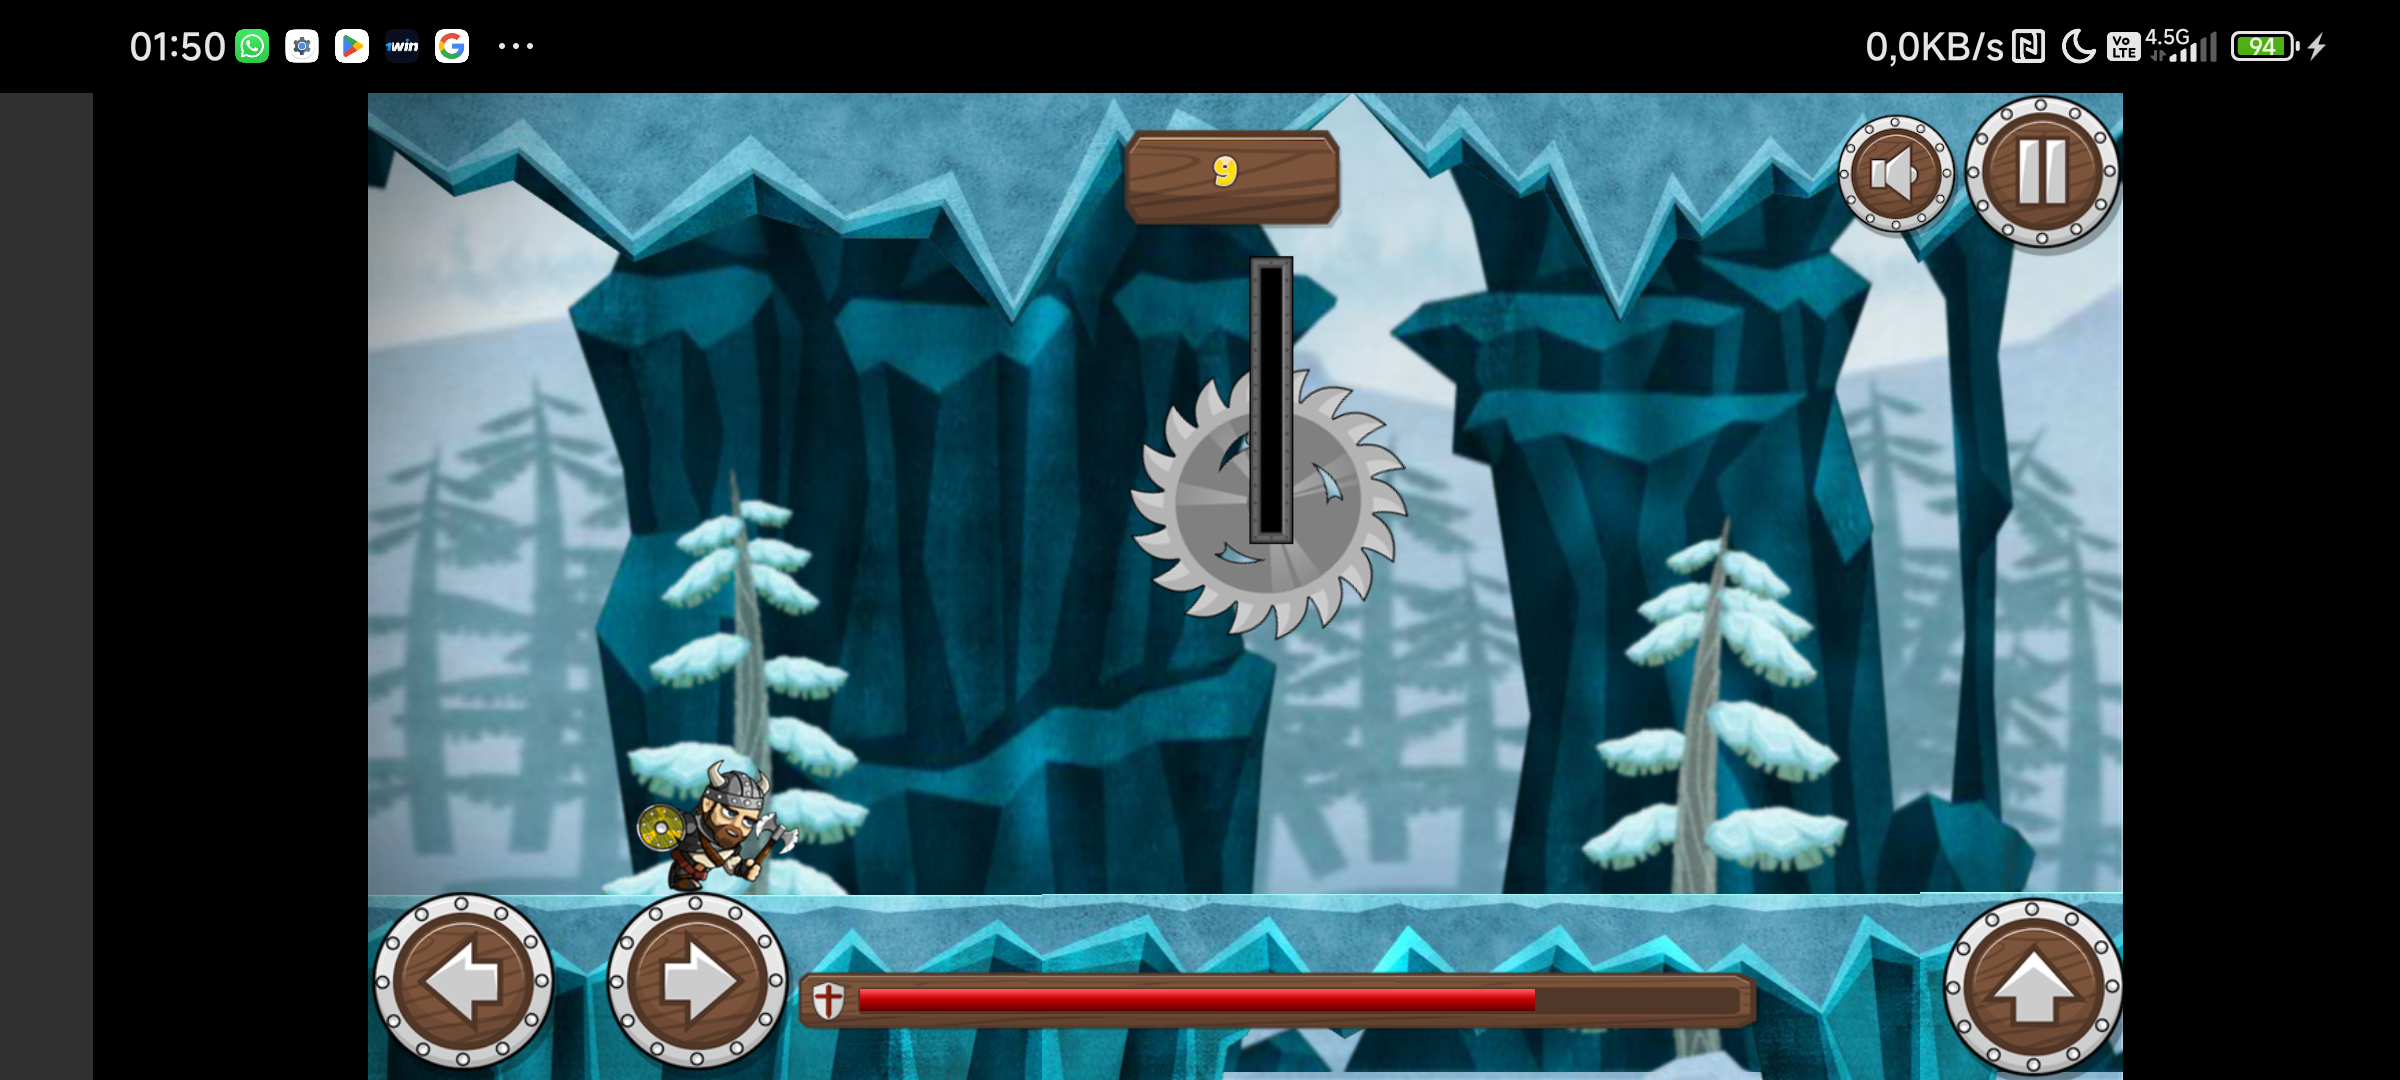 Viking Road screenshot game